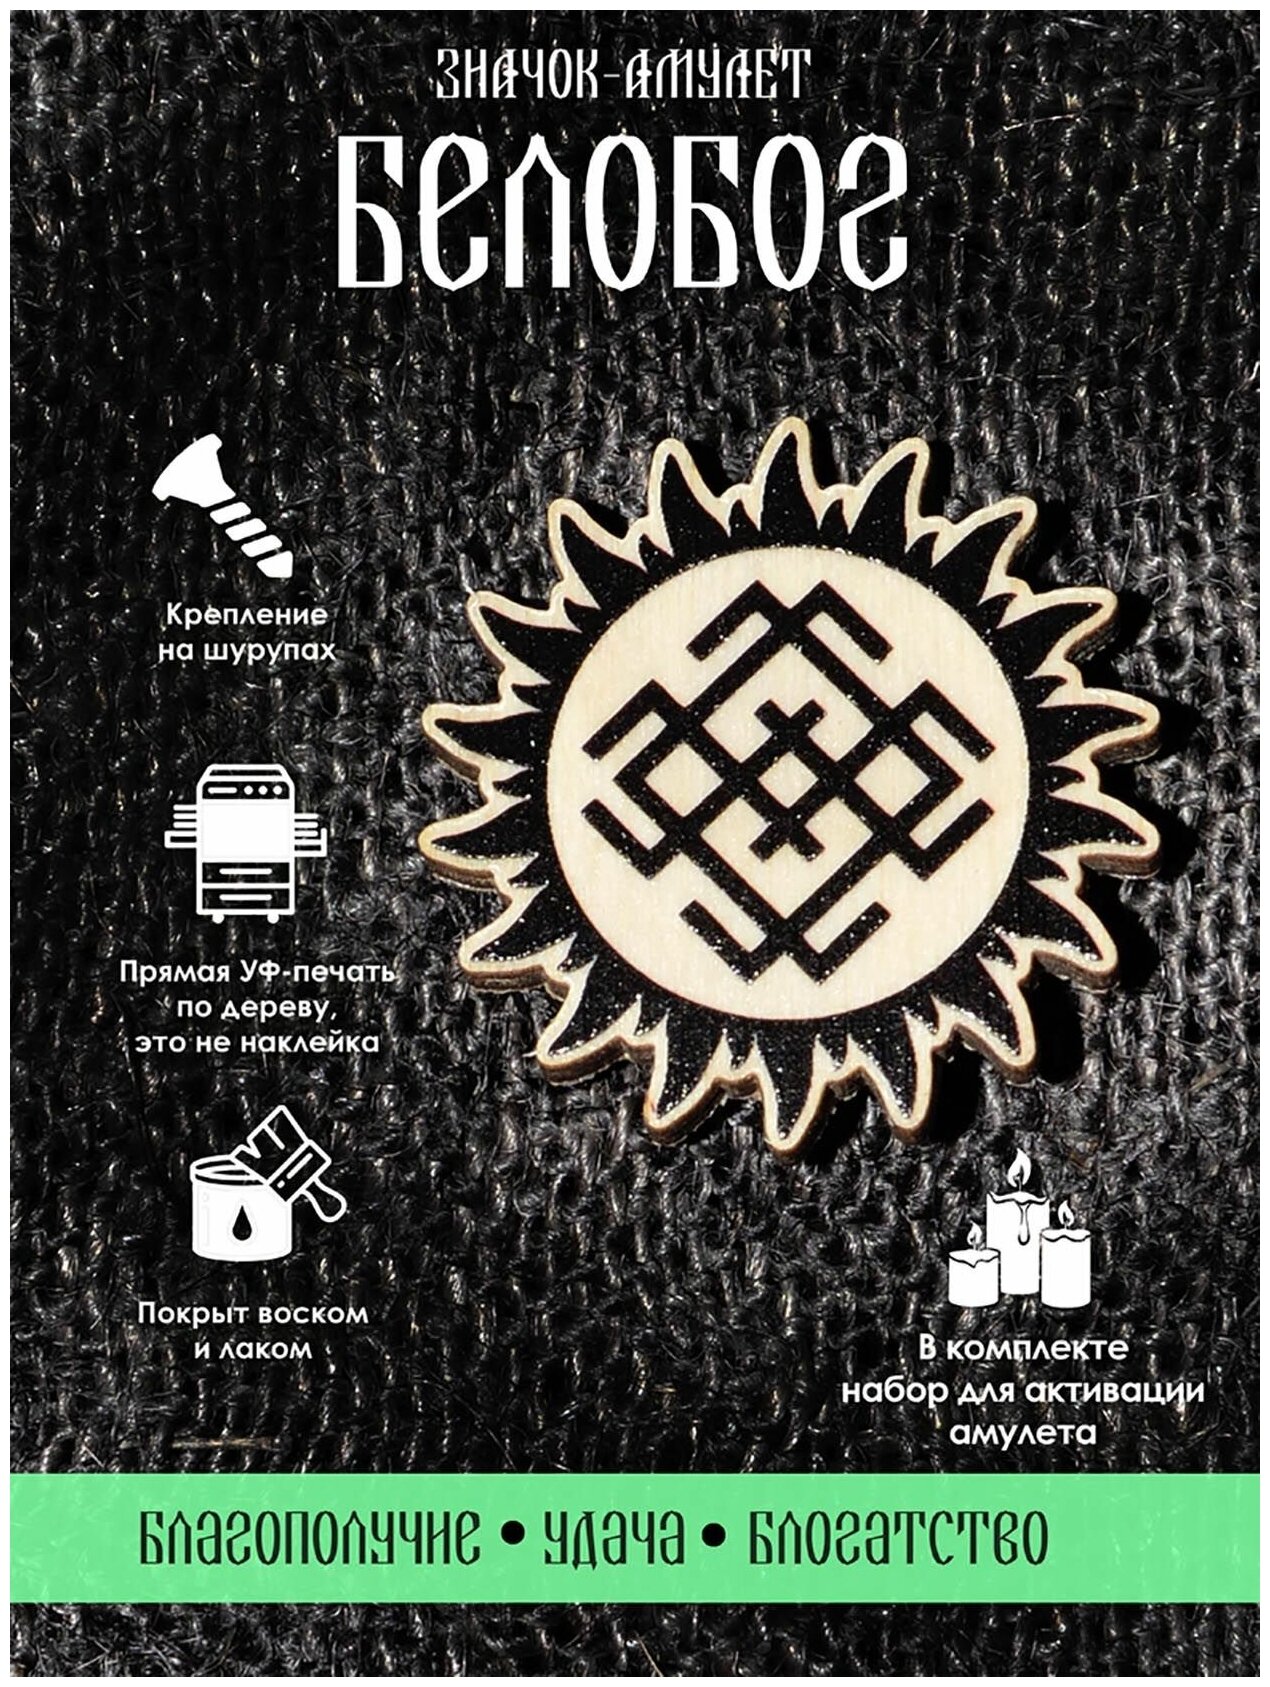 Брошь-значок YURKINO "Белобог" славянский символ амулет оберег.